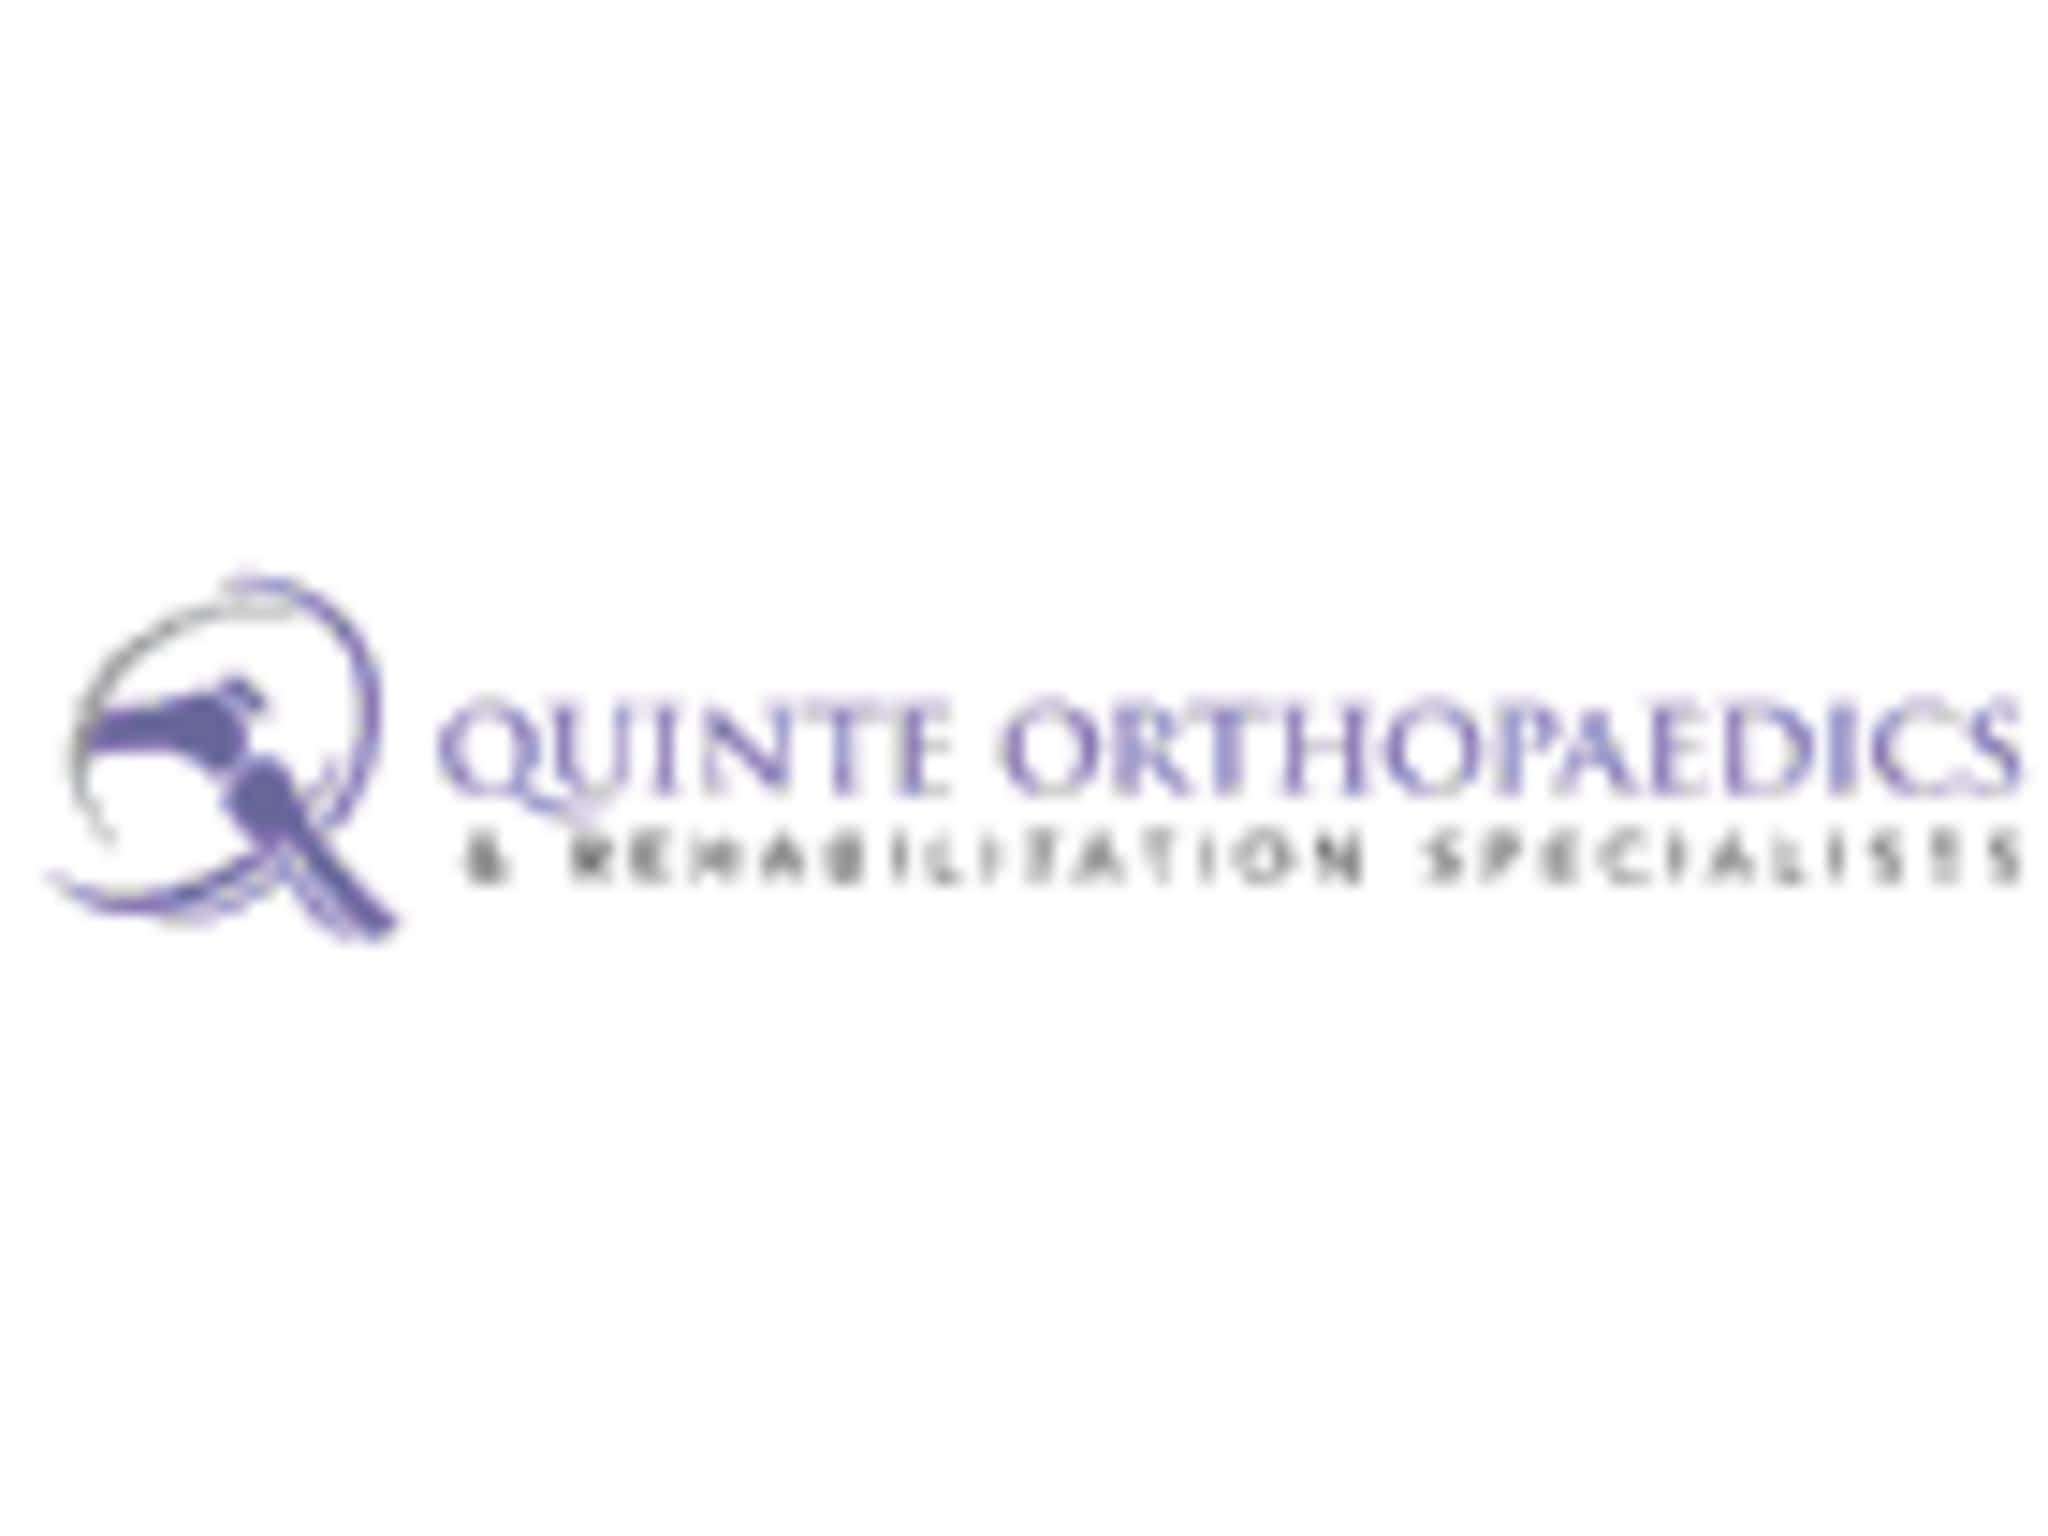 photo Quinte Orthopaedics & Rehabilitation Specialists